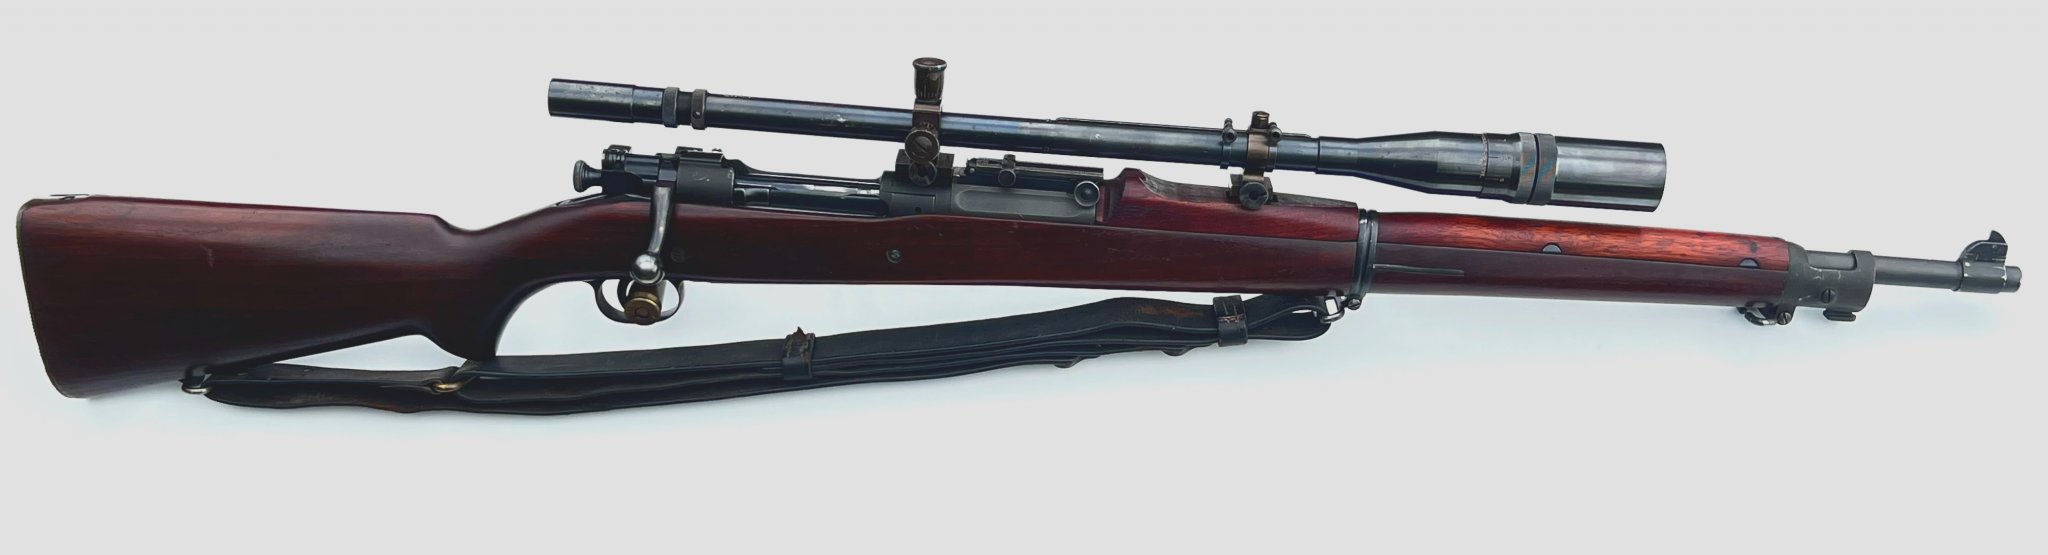 Guns Sniper 1526280.jpg